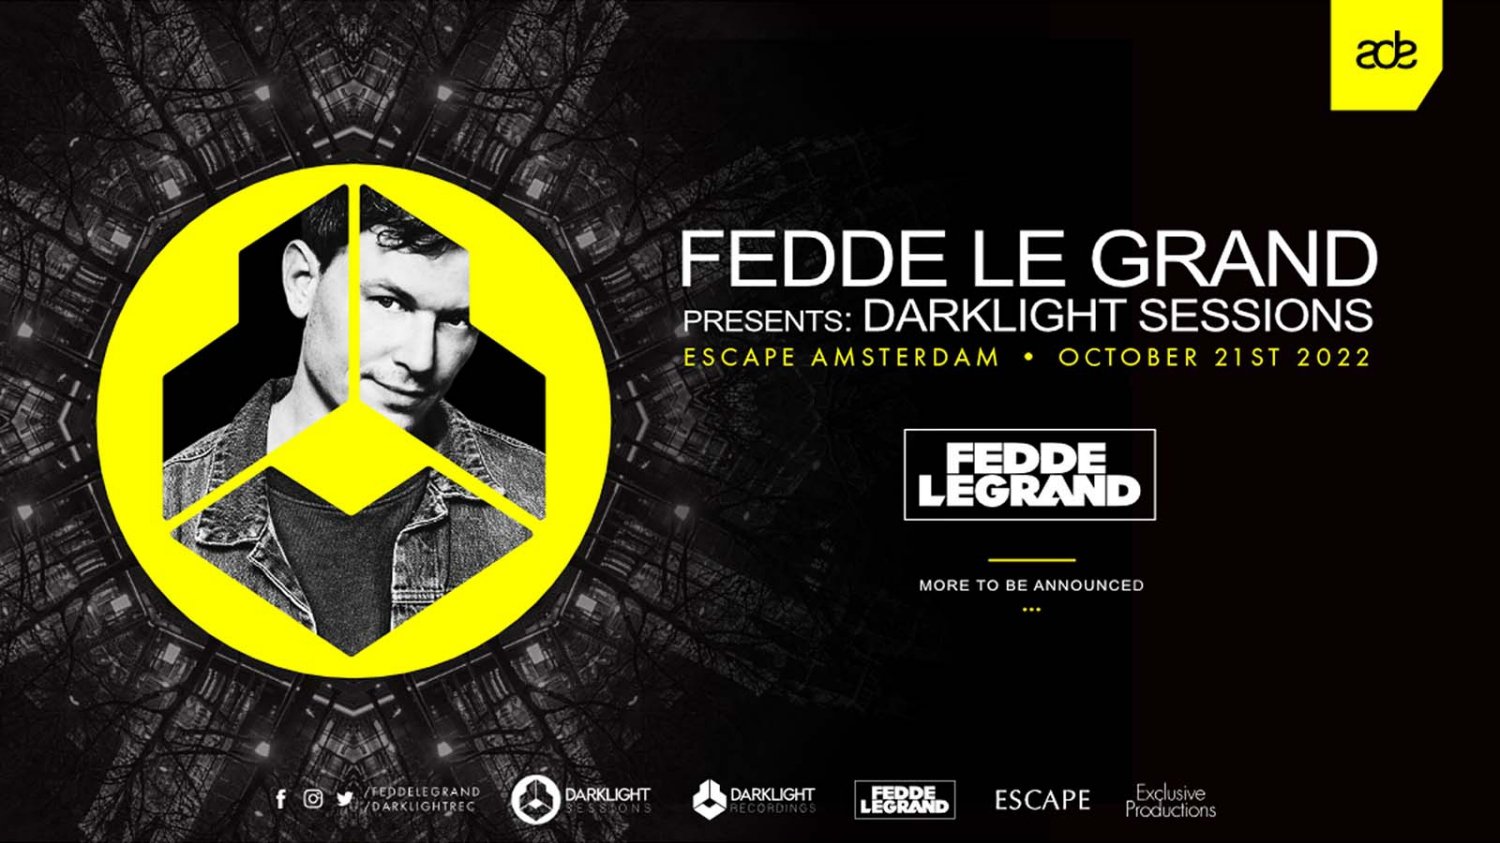 Fedde Le Grand presents Darklight Sessions